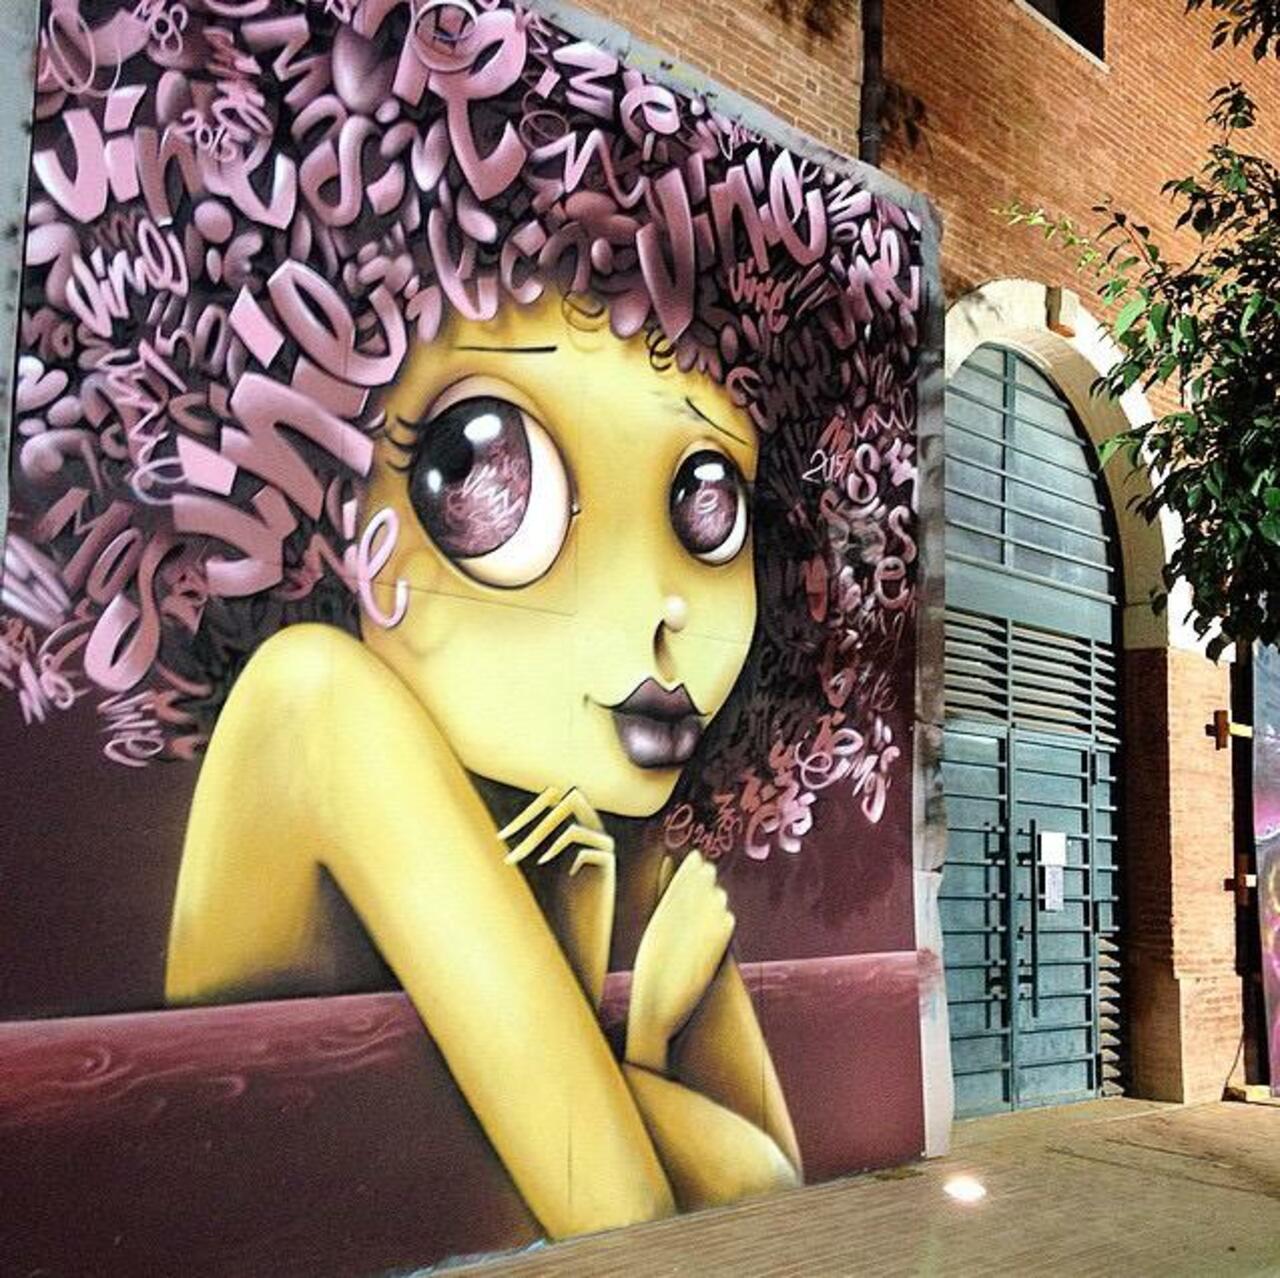 New Street Art by Vinie 

#art #arte #graffiti #streetart http://t.co/rlnhpV4r6Z